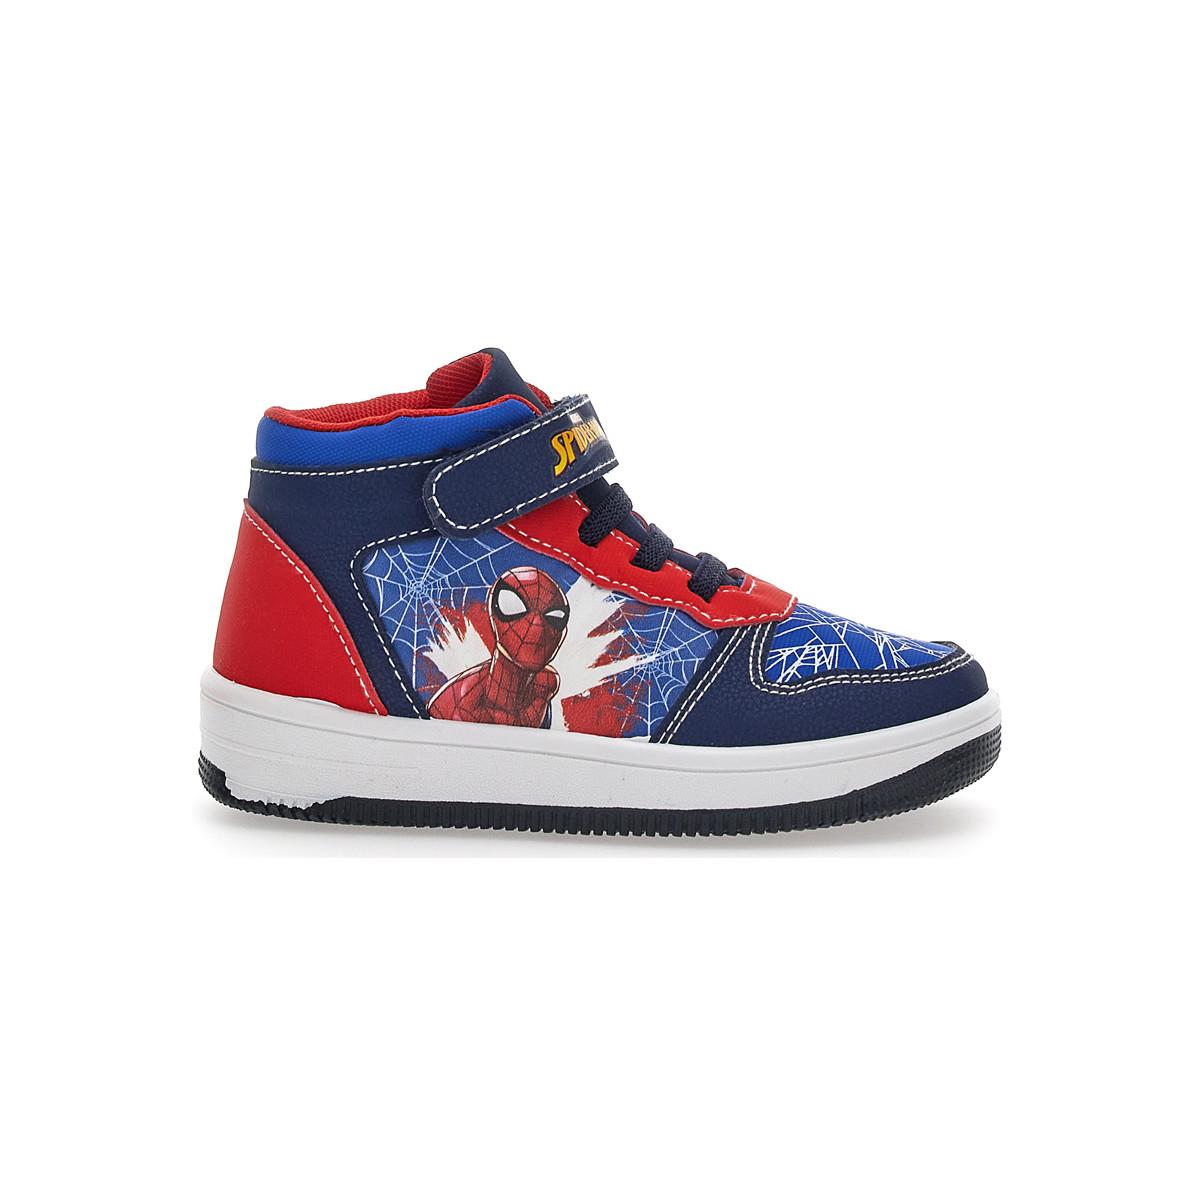 Scarpe Bambino Sneakers Marvel 5355 Blu